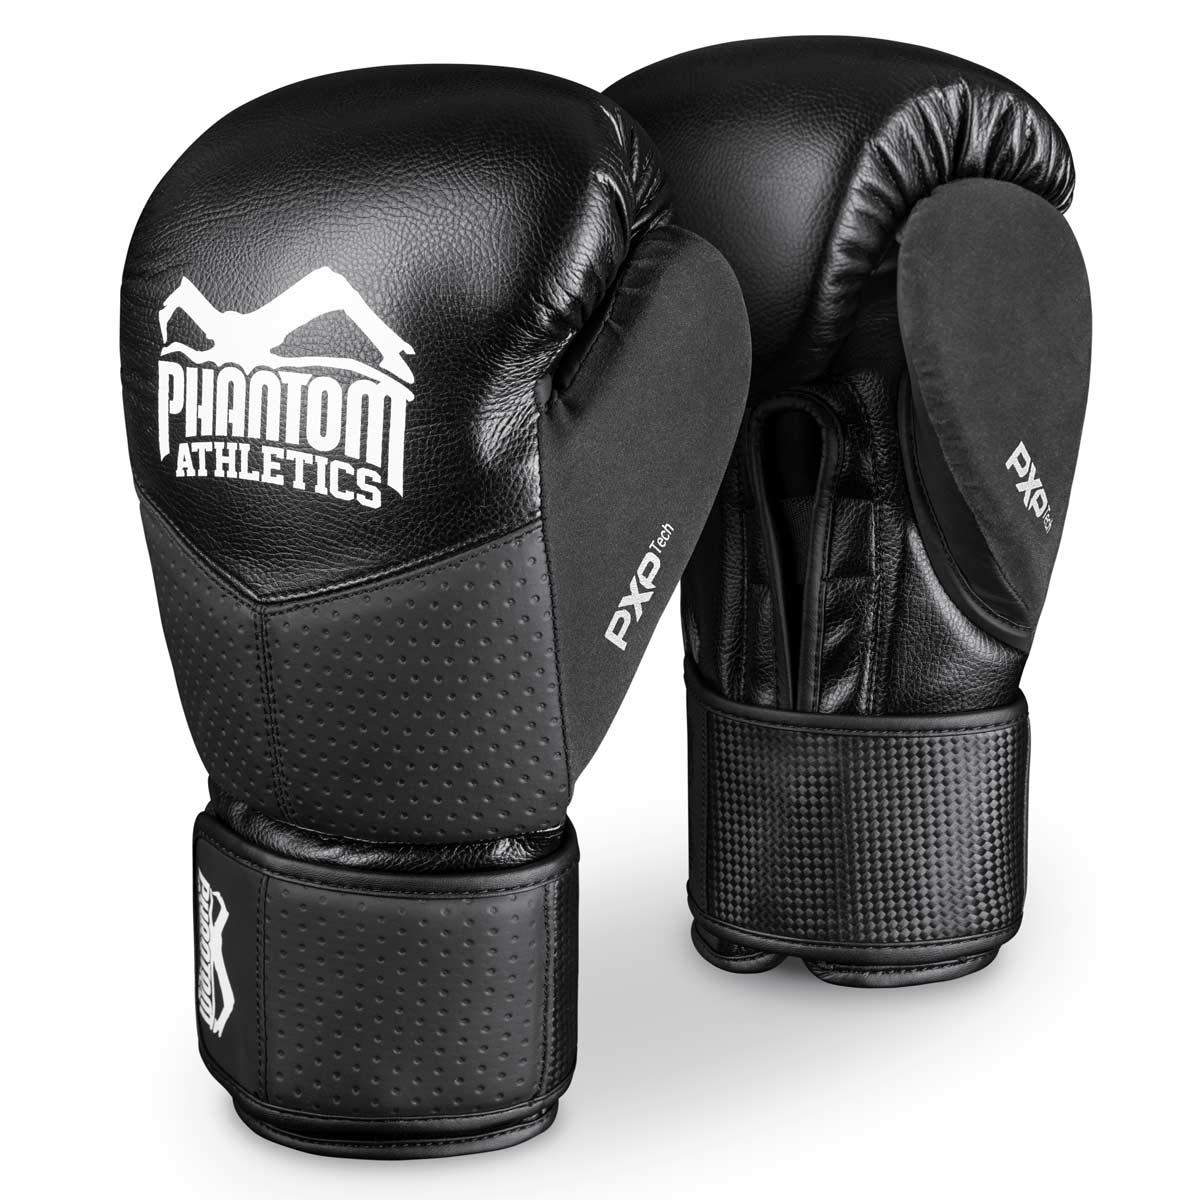 Cómo elegir guantes de MMA